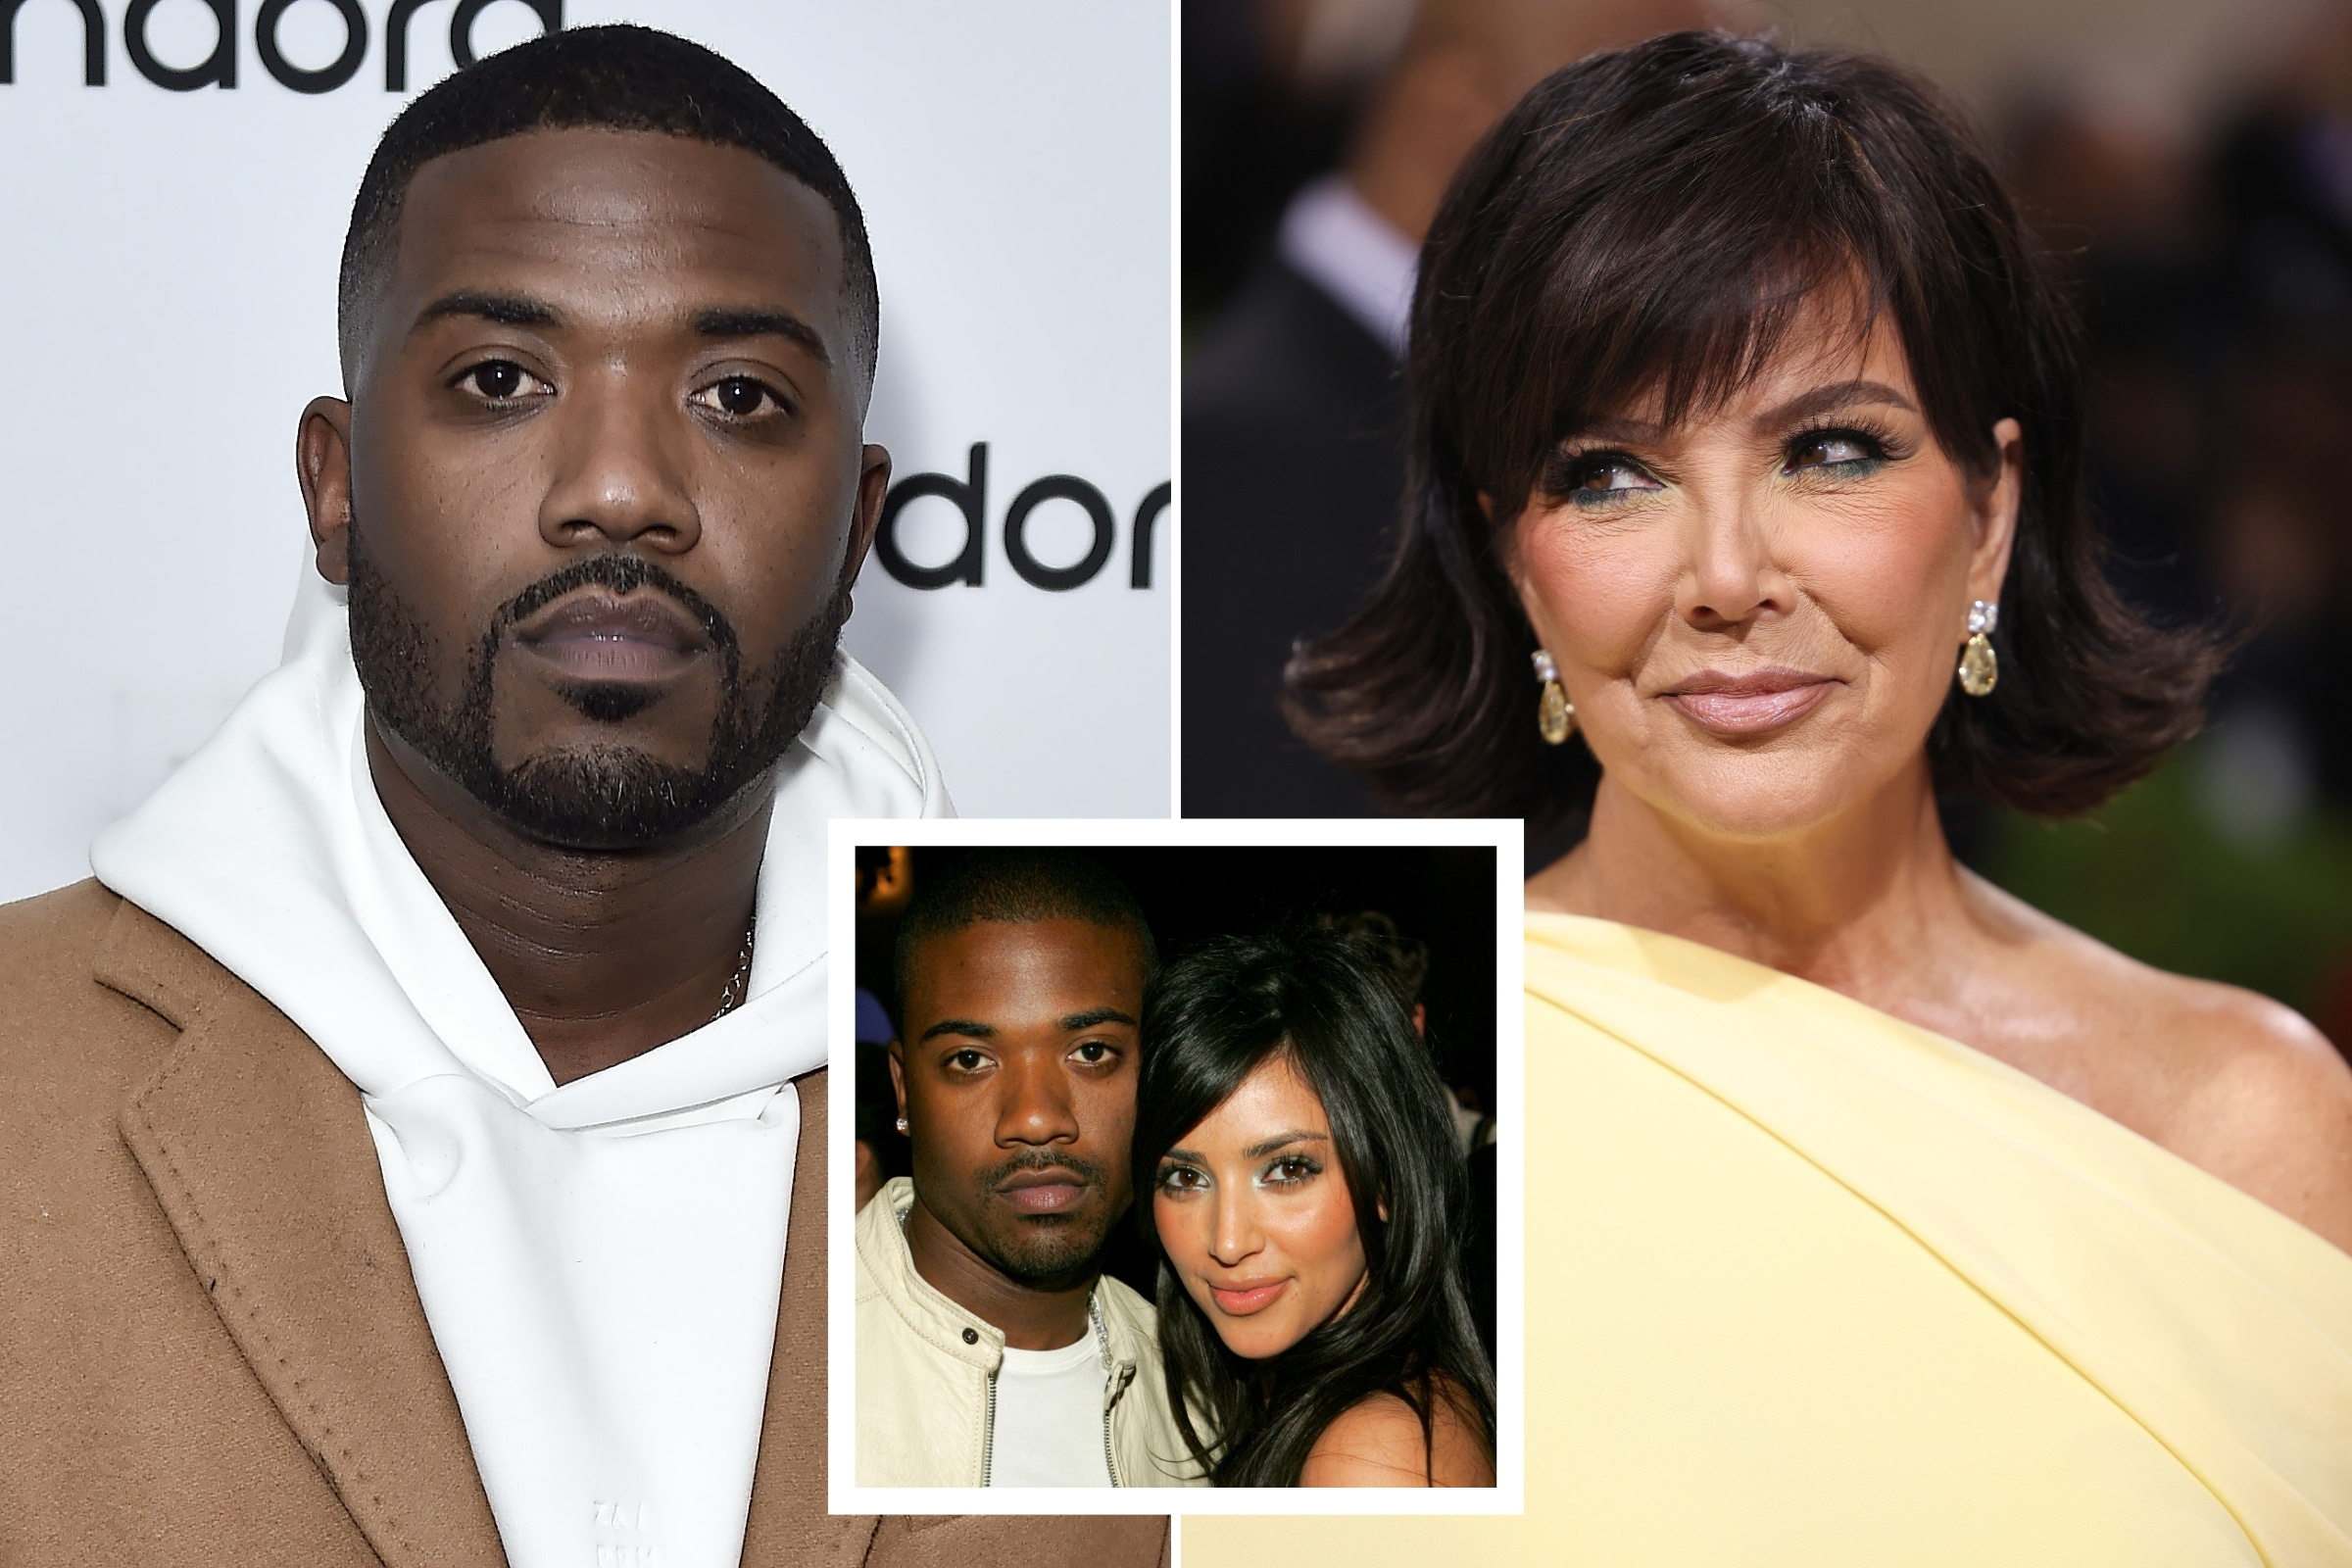 Kim Kardashian Pron Video - Ray J Says Kris Jenner Watched, Hand-Picked Sex Tape With Kim Kardashian